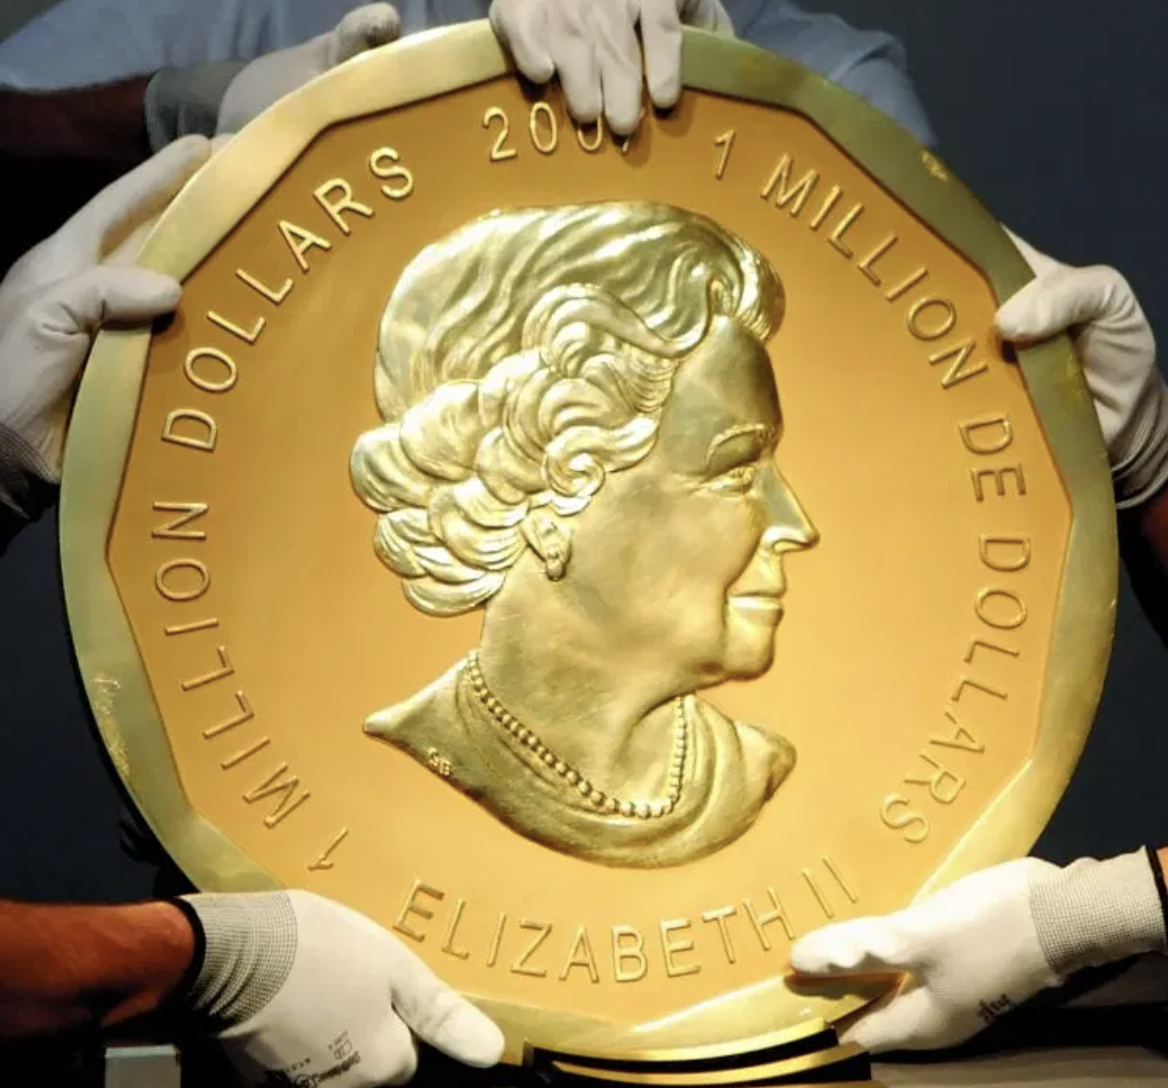 gold coin stolen from berlin museum - Dollars Million Elizabeth 200 Million De Dollars